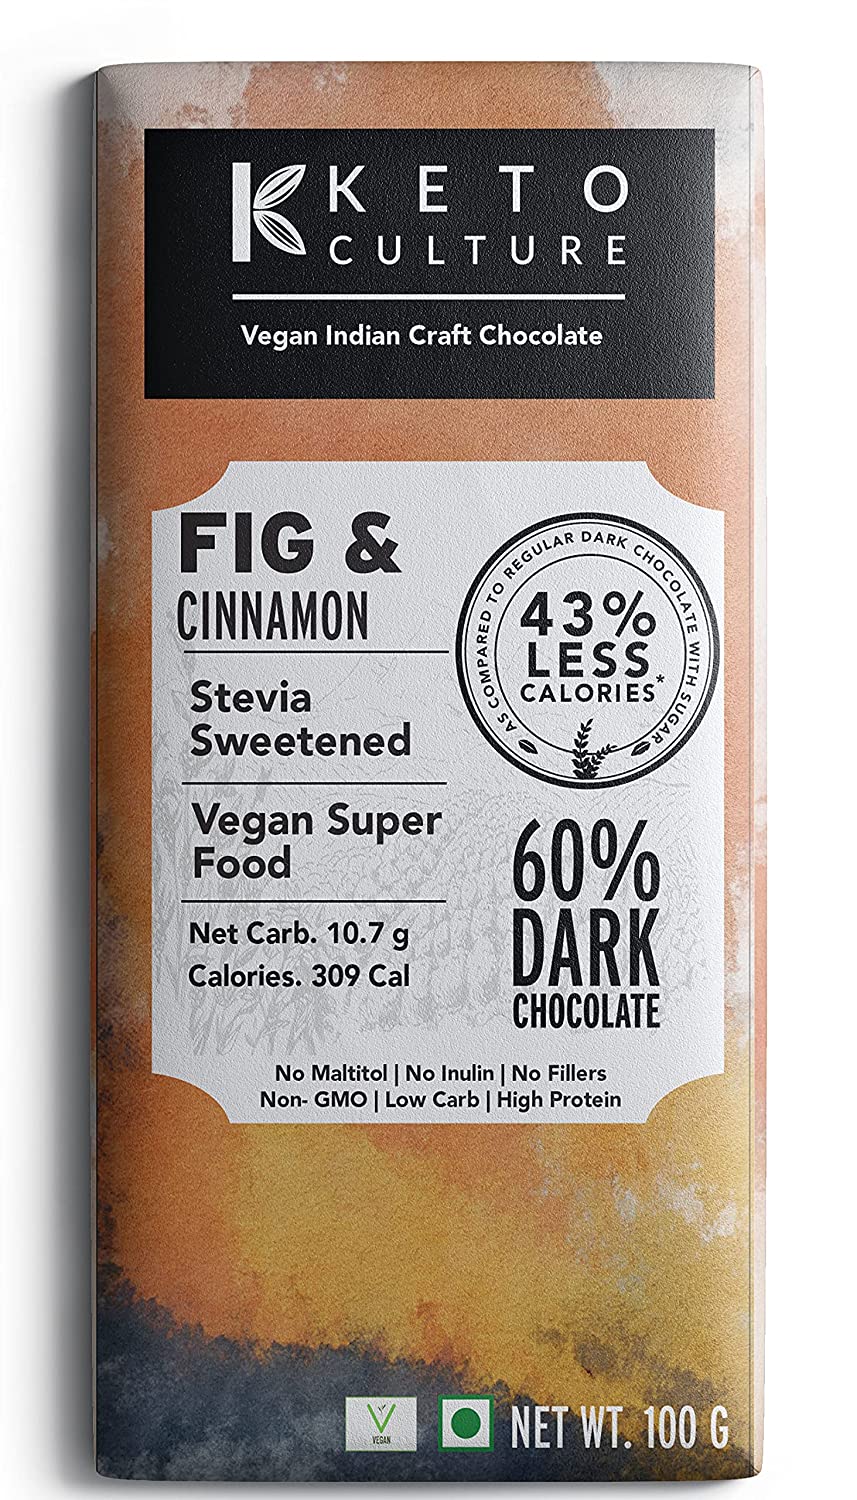 Keto Culture Fig and Cinnamon Vegan Dark Chocolate Image